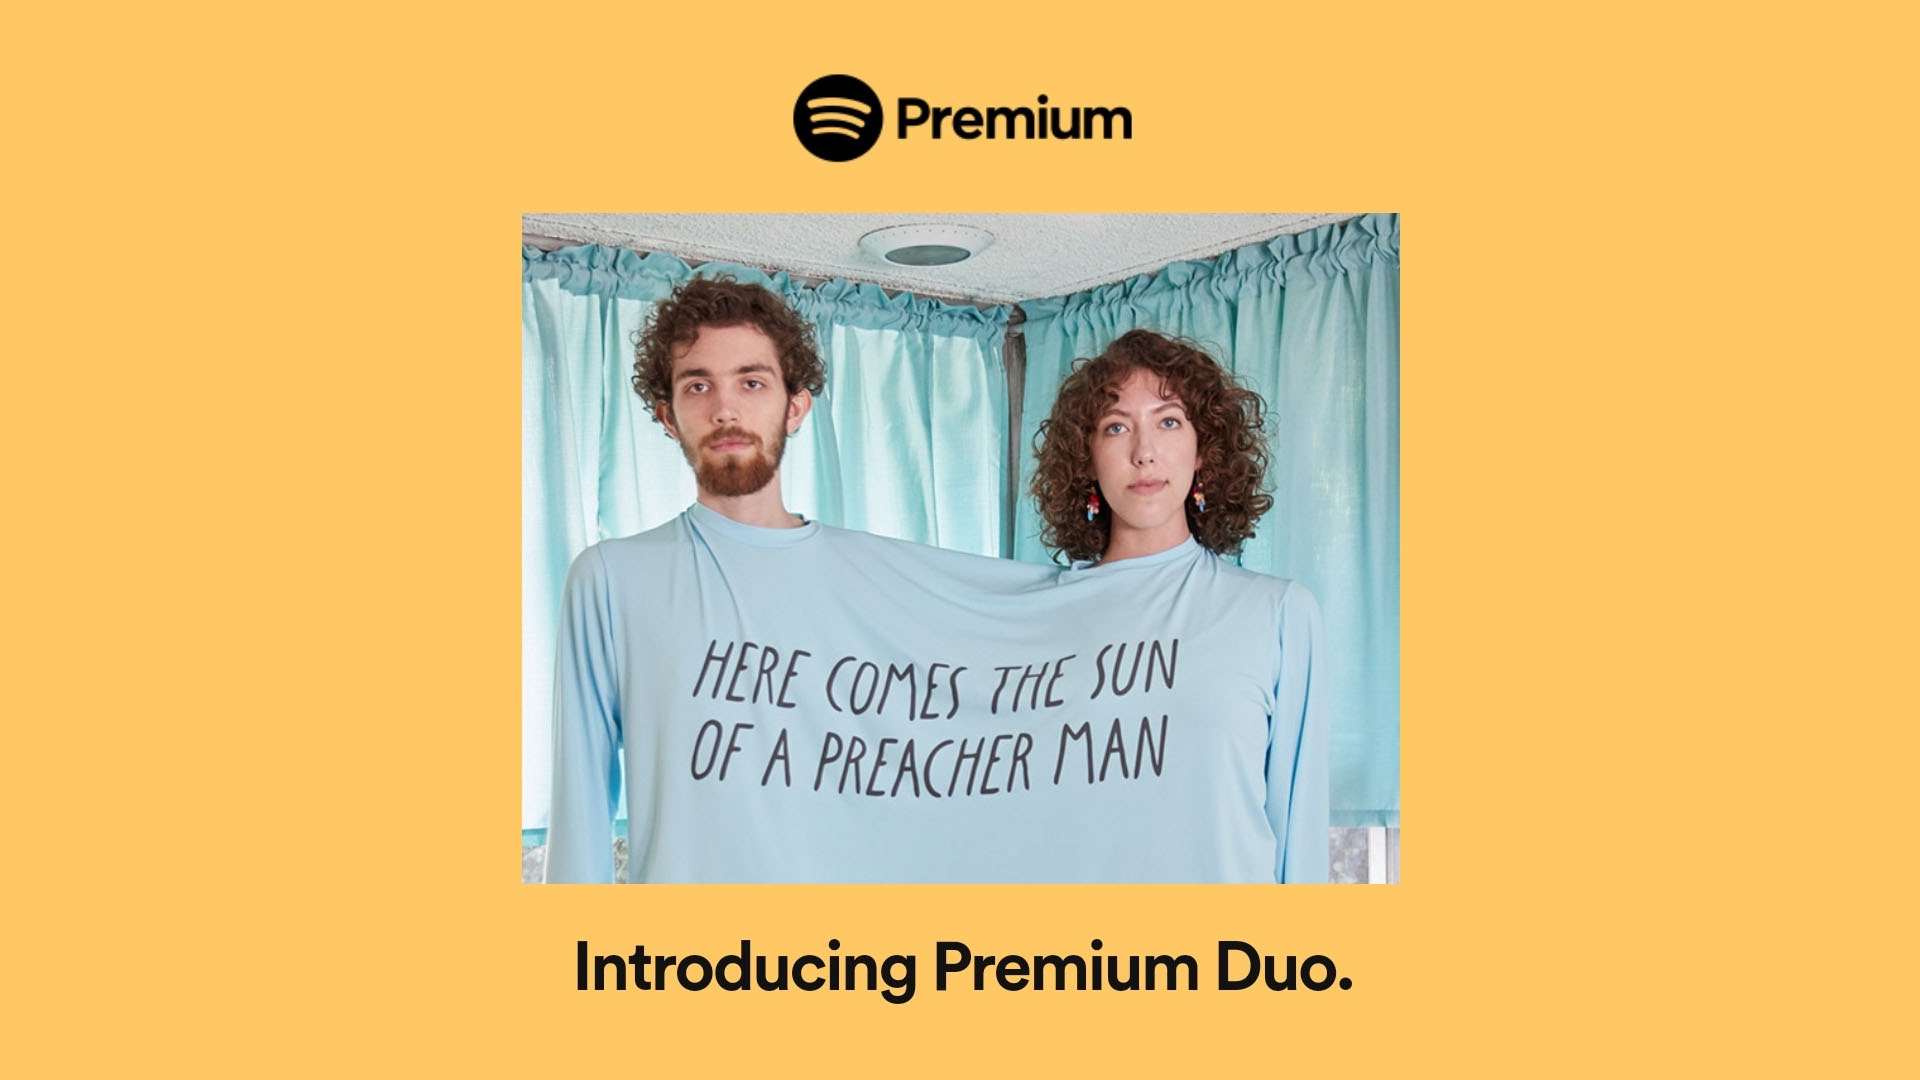 Spotify Premium Duo